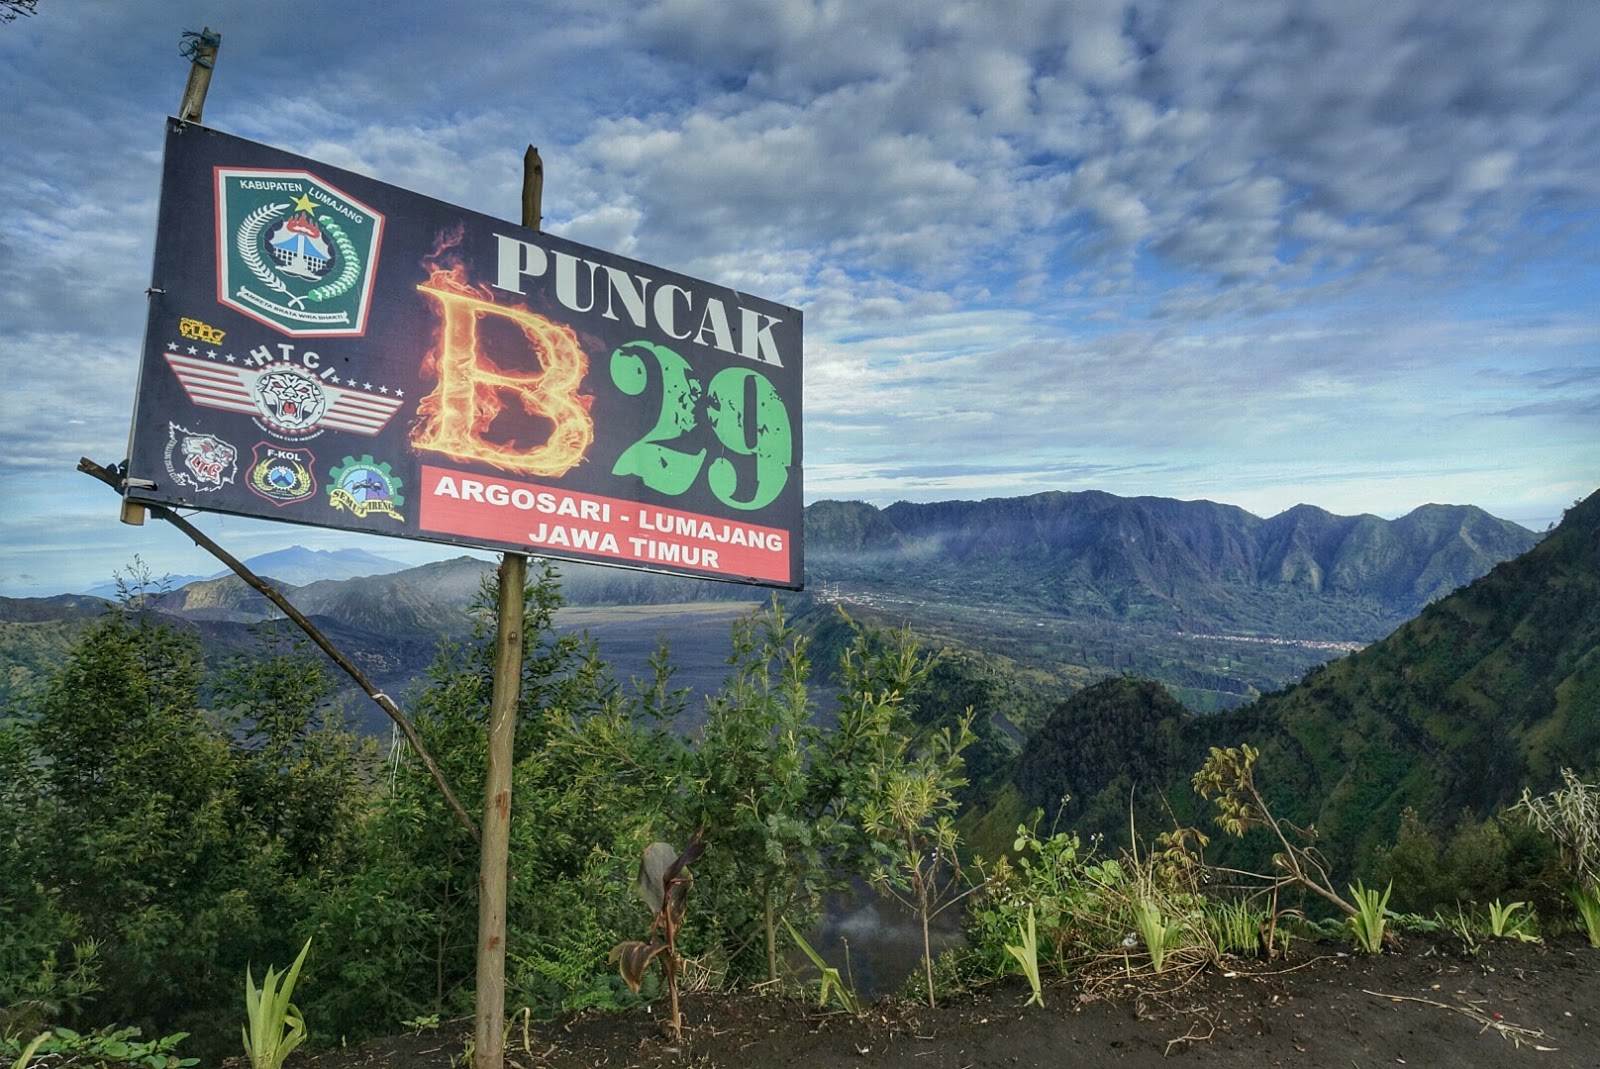 10 Fakta Wisata Puncak B29 Argosari Lumajang Jawa Timur